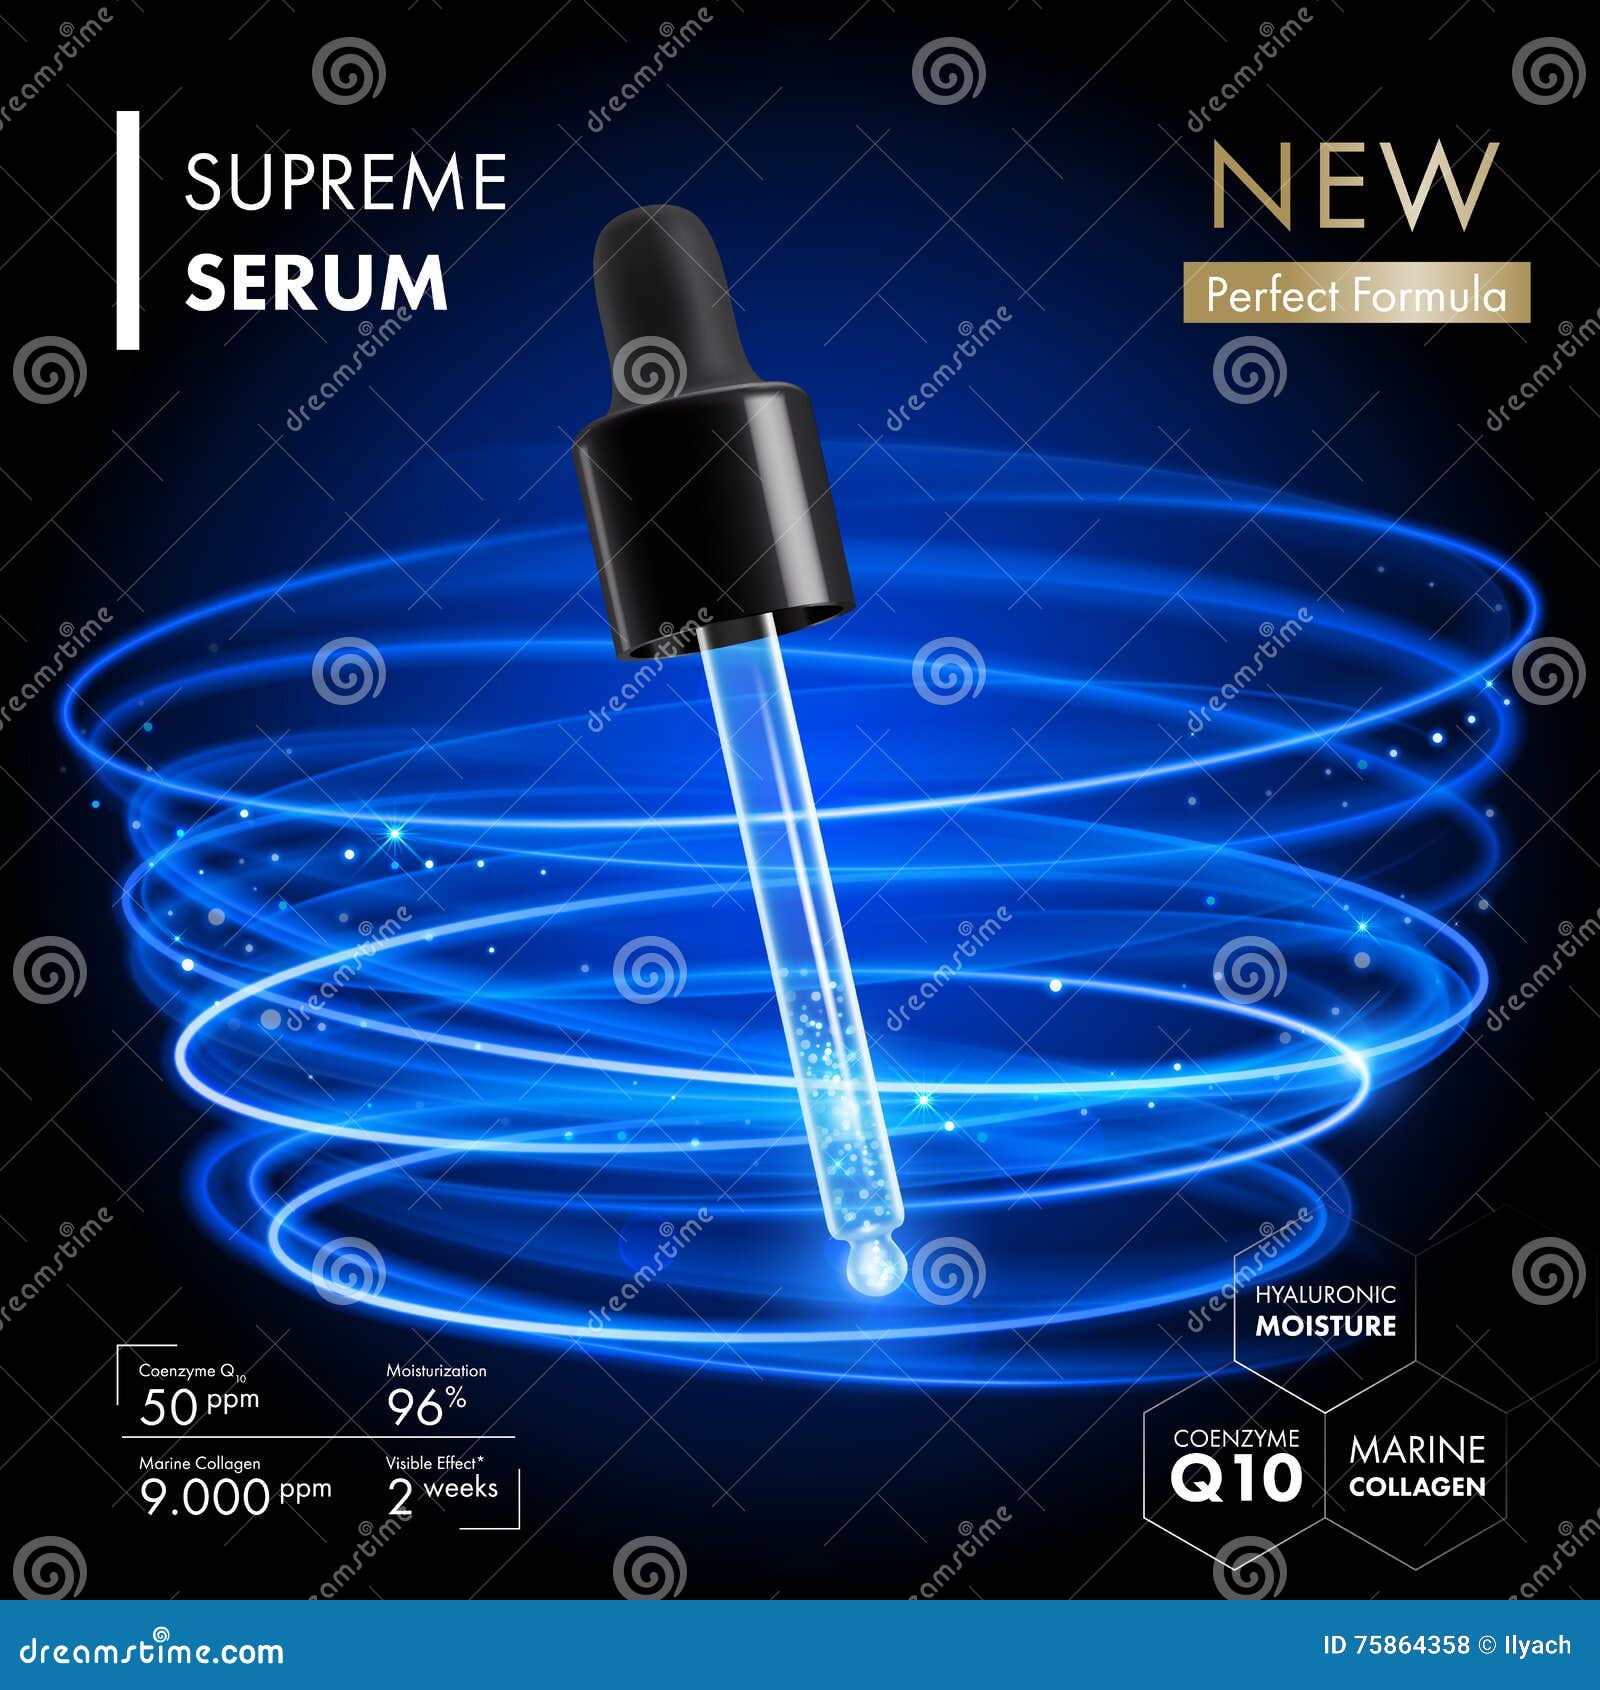 supreme serum dropper with coenzyme q10 essence